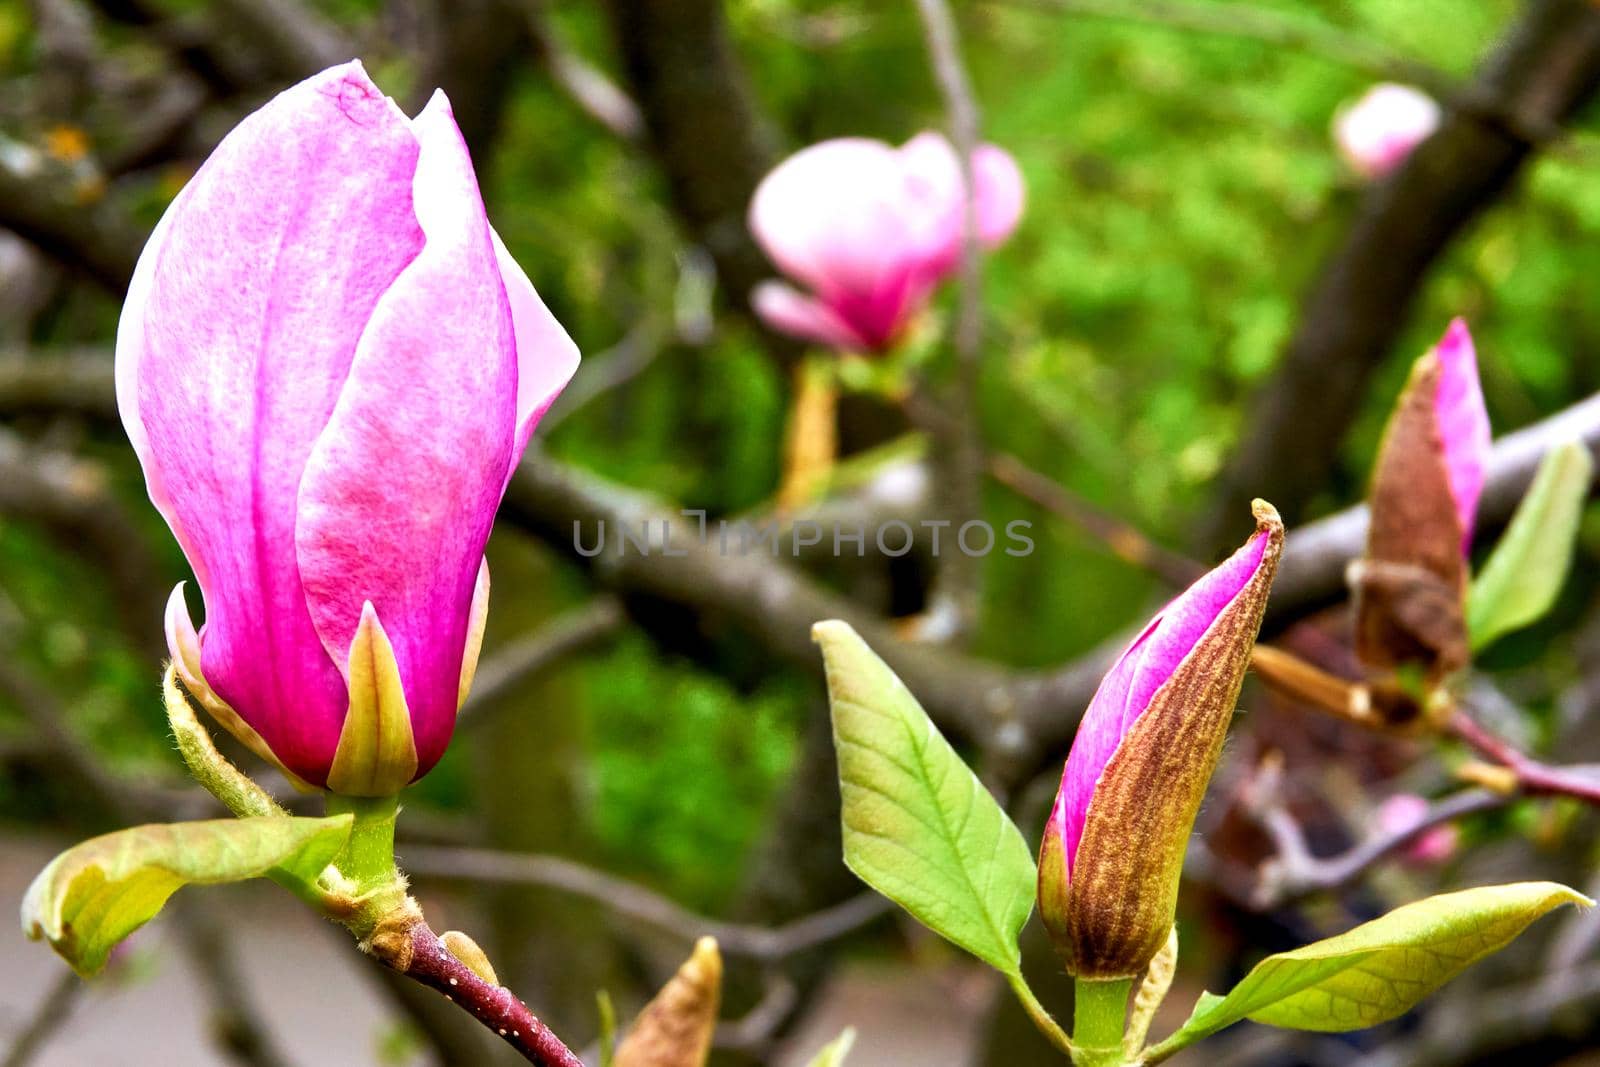 Lovely purplish pink magnolia flowers in spring garden by jovani68